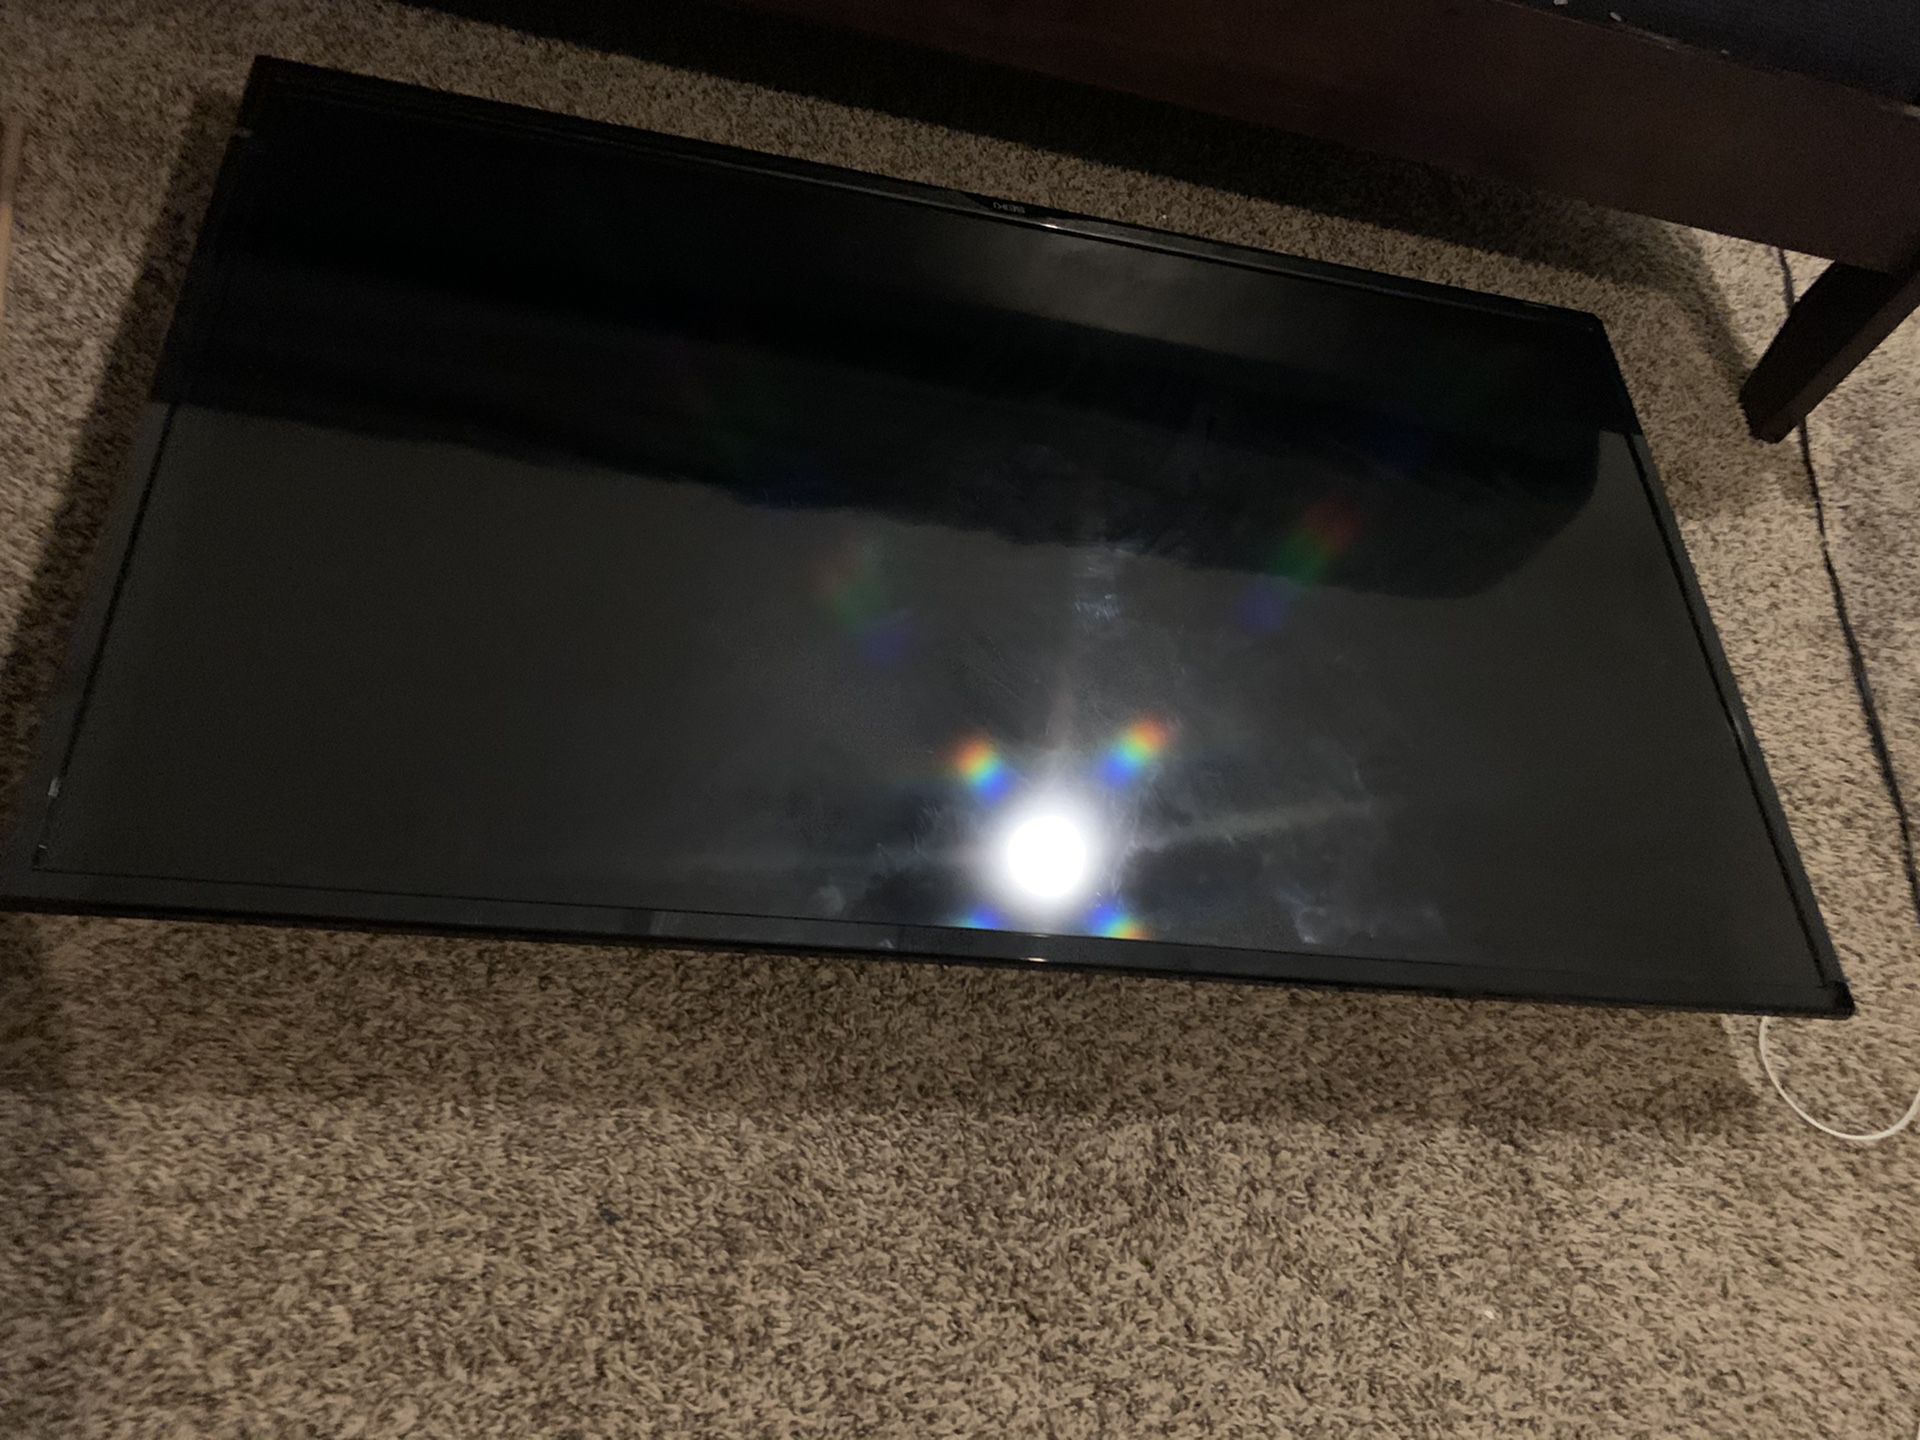 40 inch flat screen tv